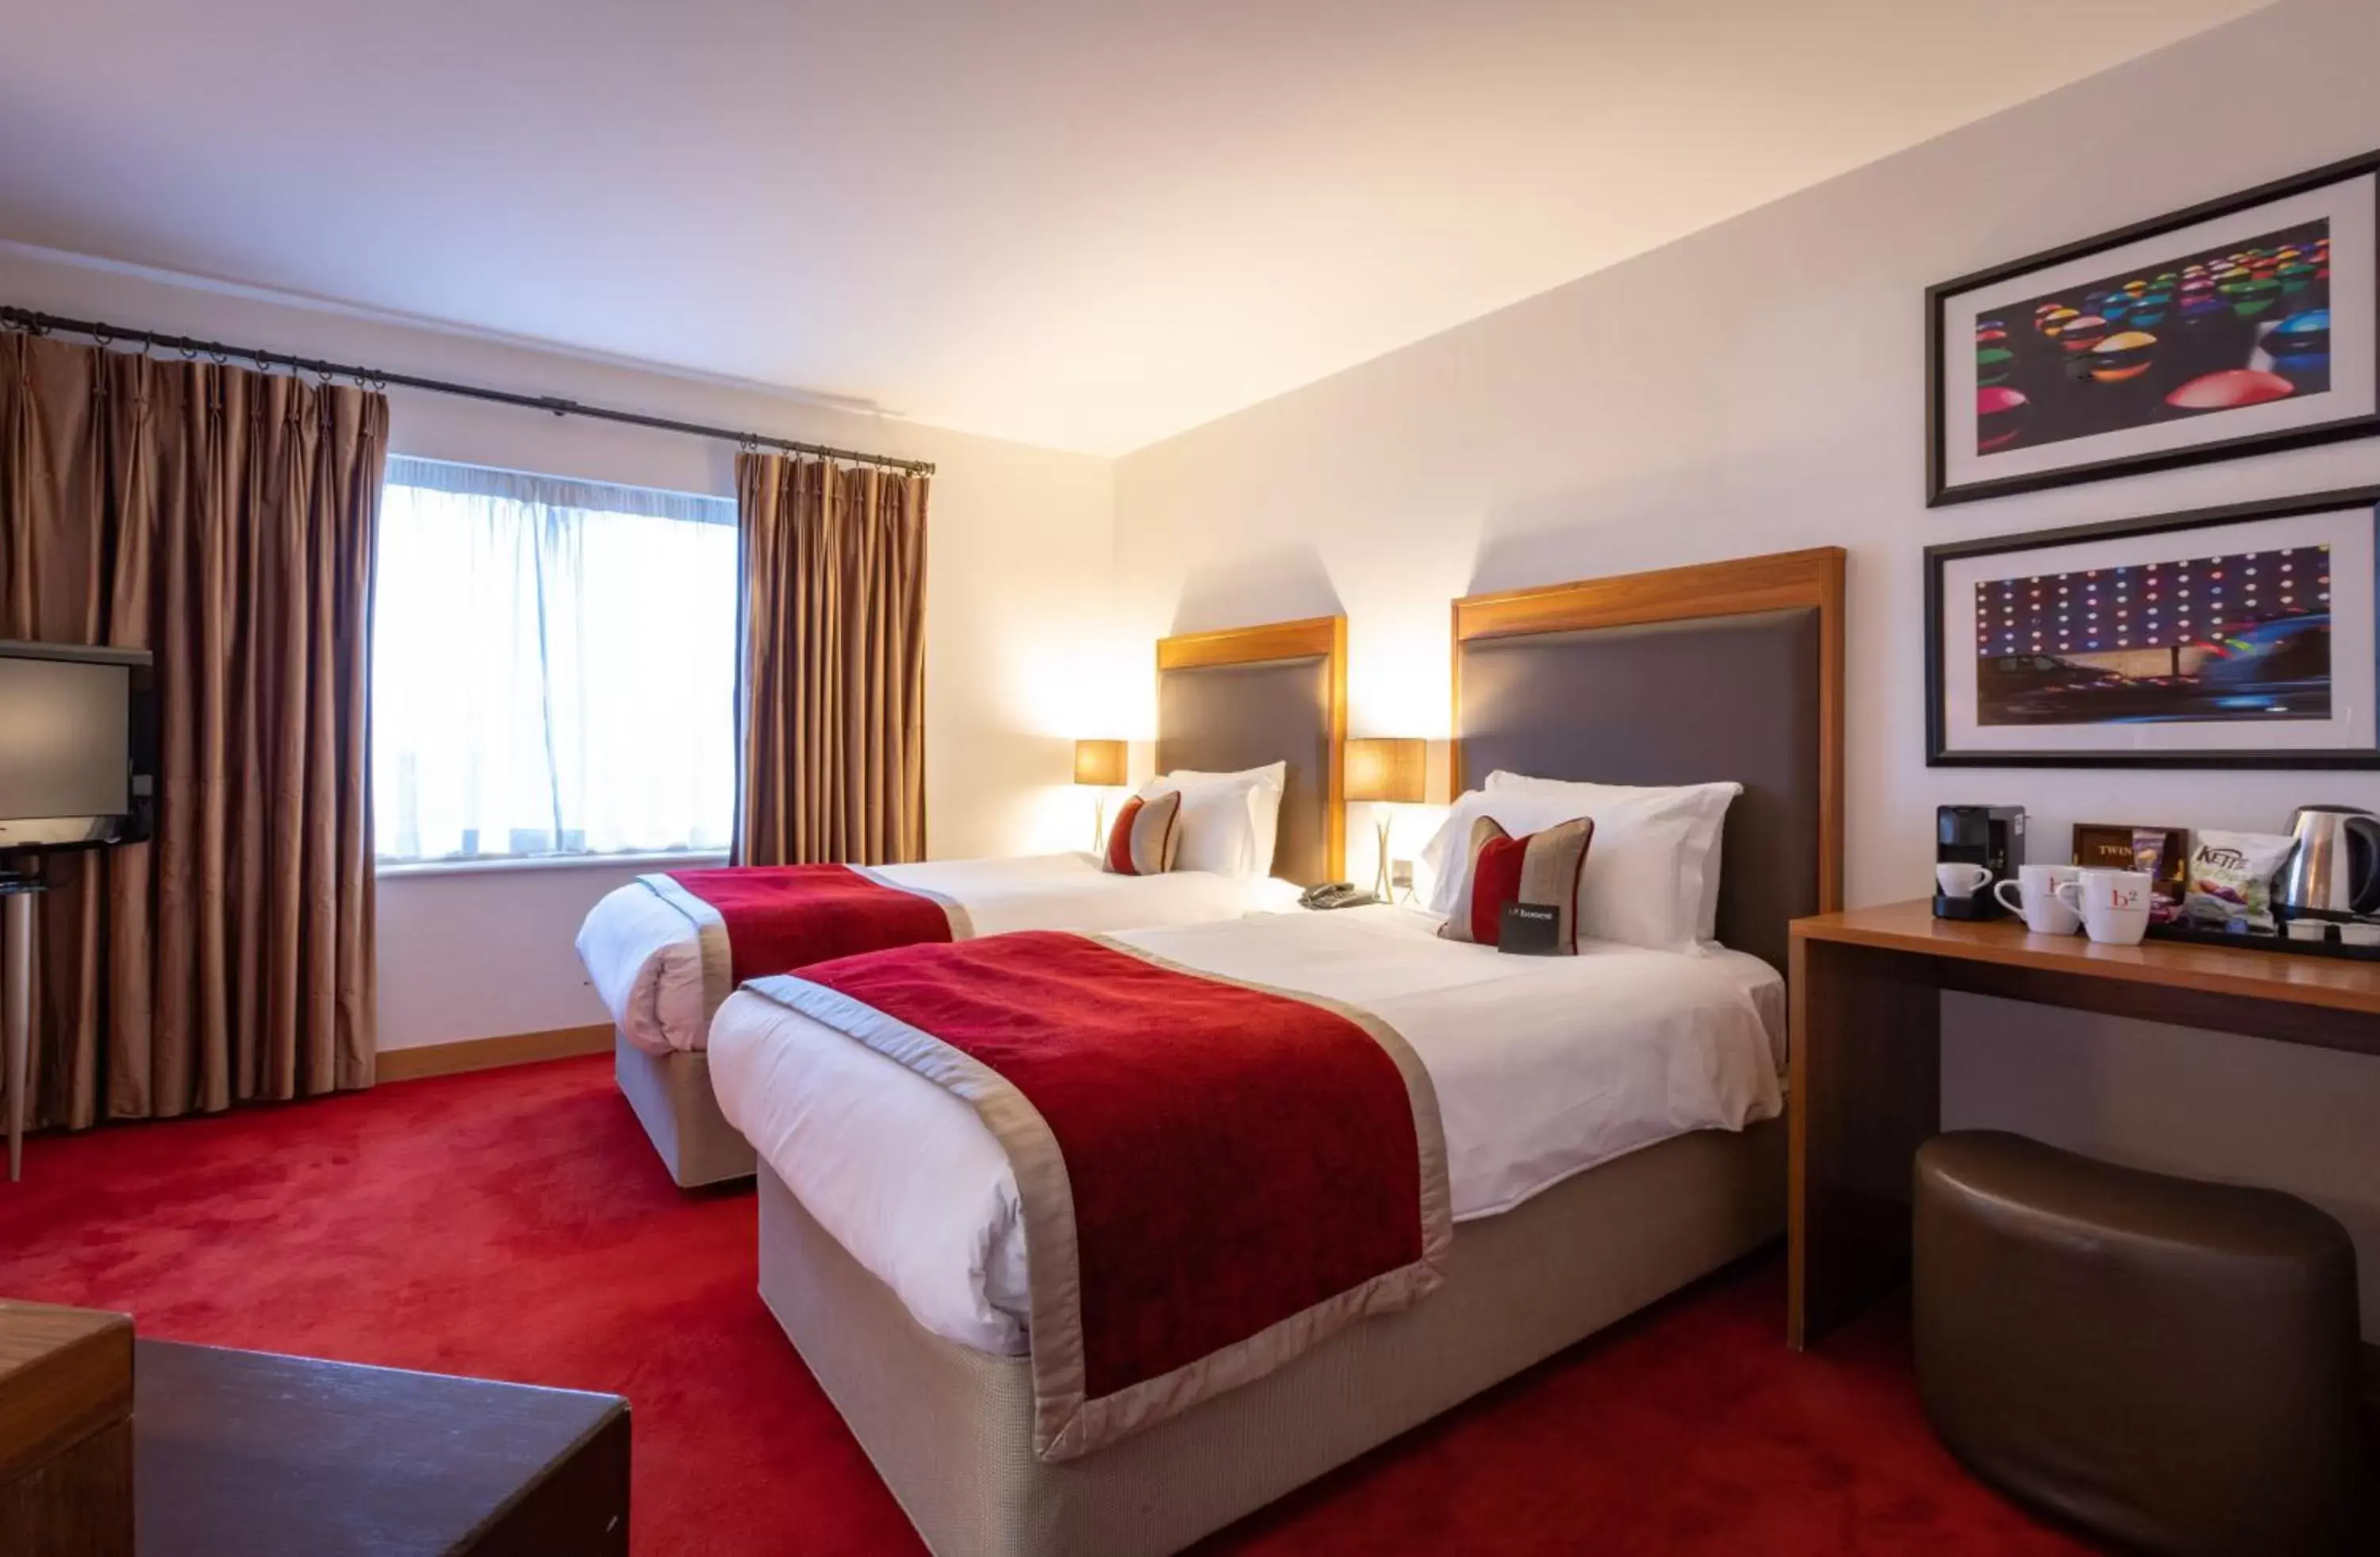 Bed in Bermondsey Square Hotel - A Bespoke Hotel